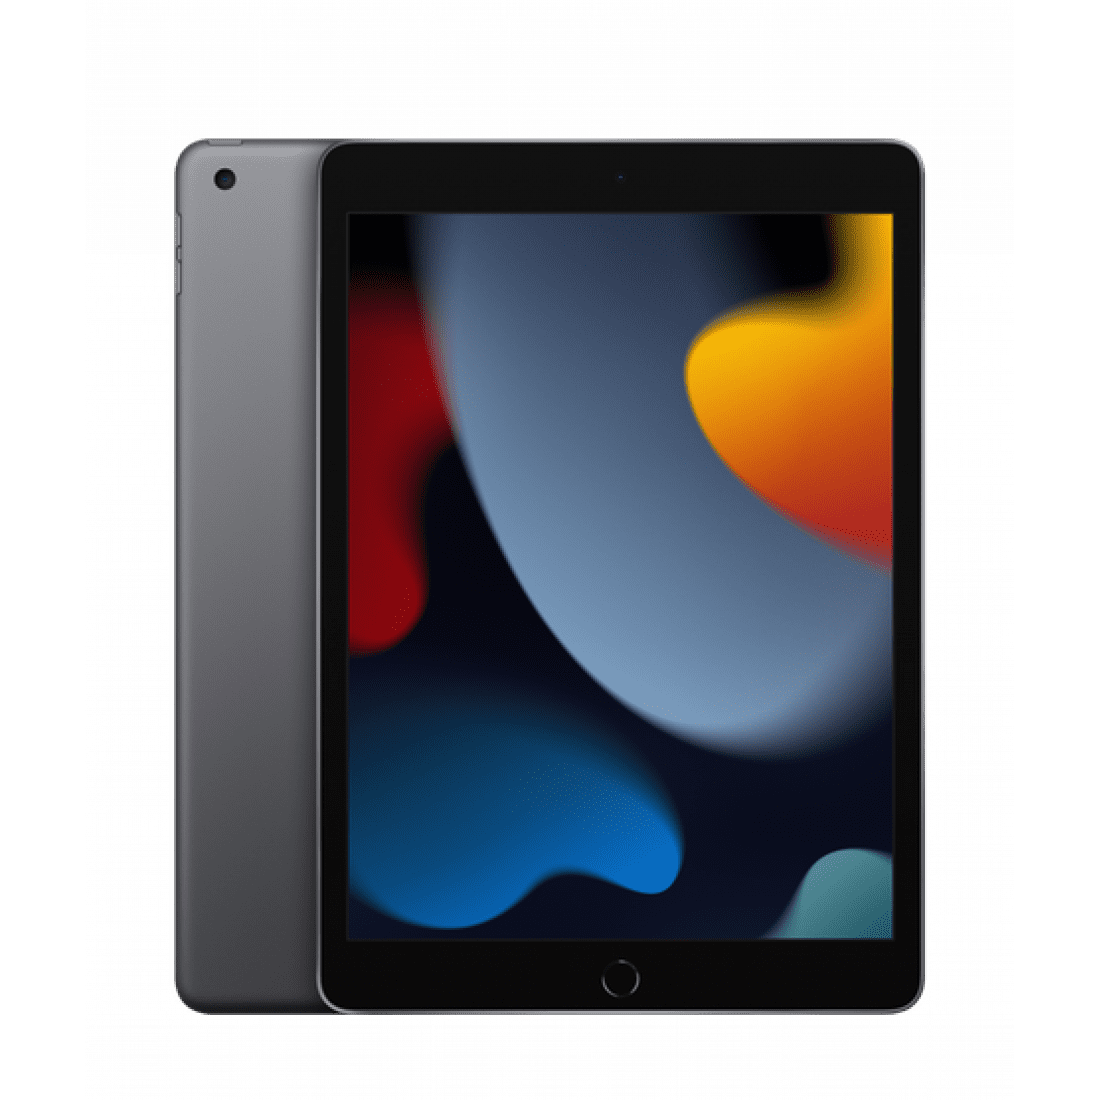 Dimprice | Apple 10.2" iPad 9th Generation (Wi-Fi, 64GB) - Space Grey